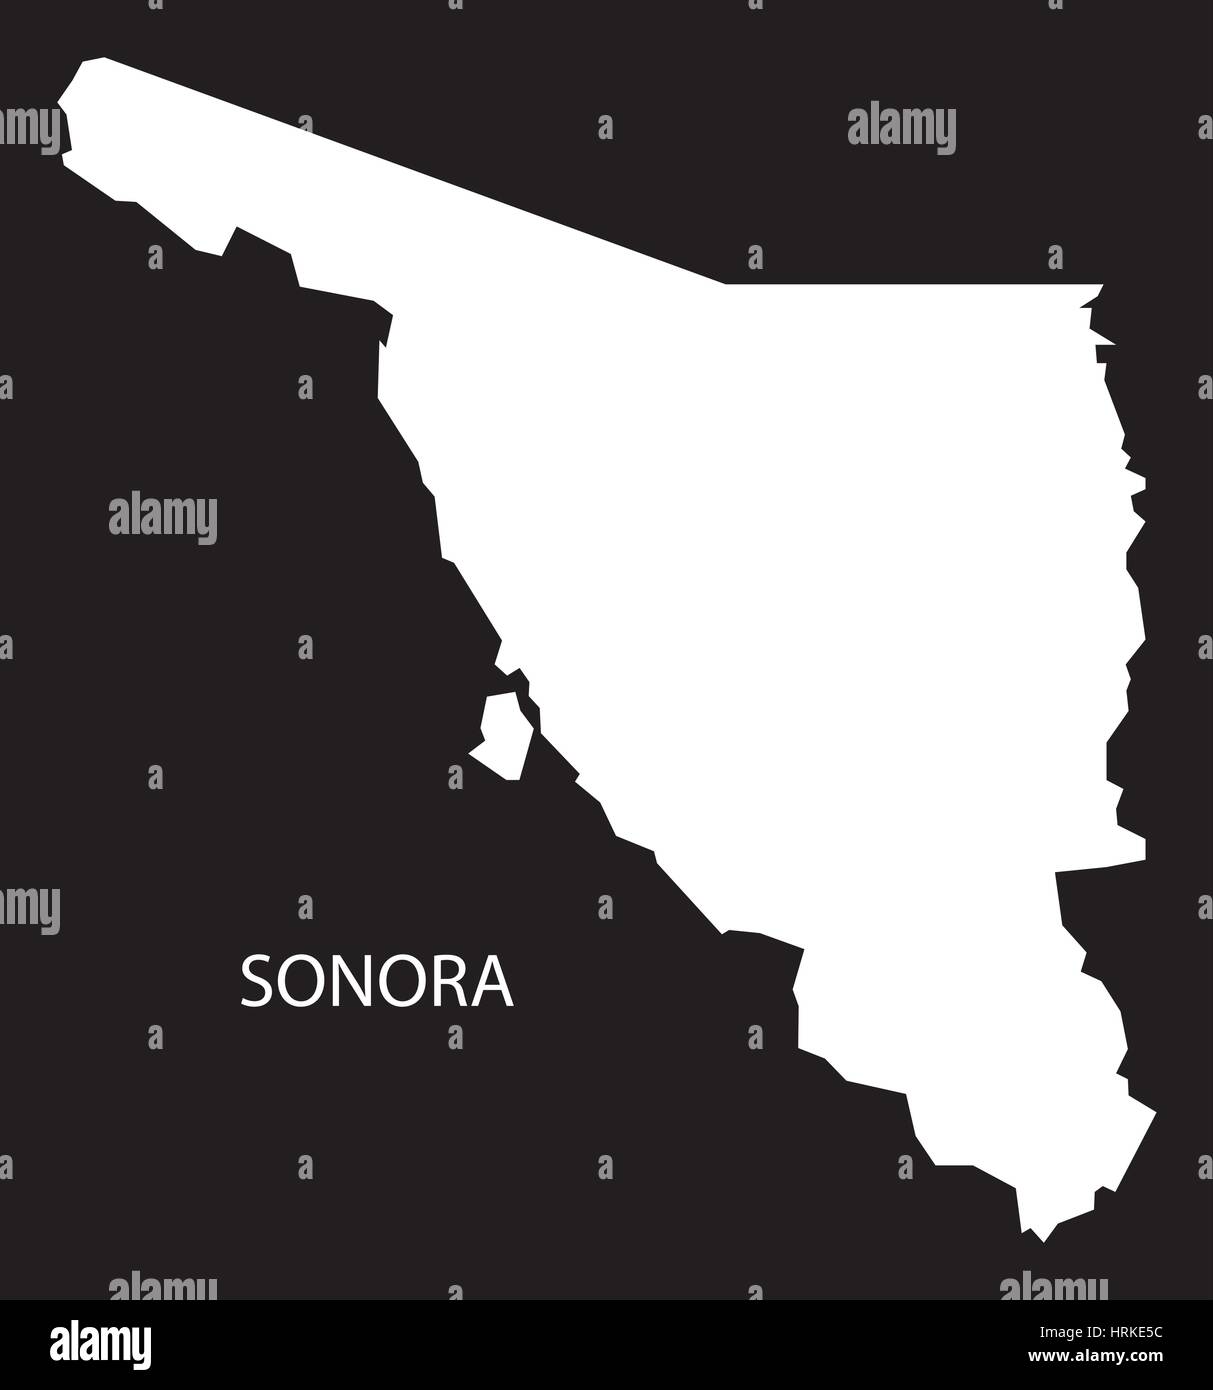 Sonora Mexiko Karte schwarz invertiert silhouette Stock Vektor